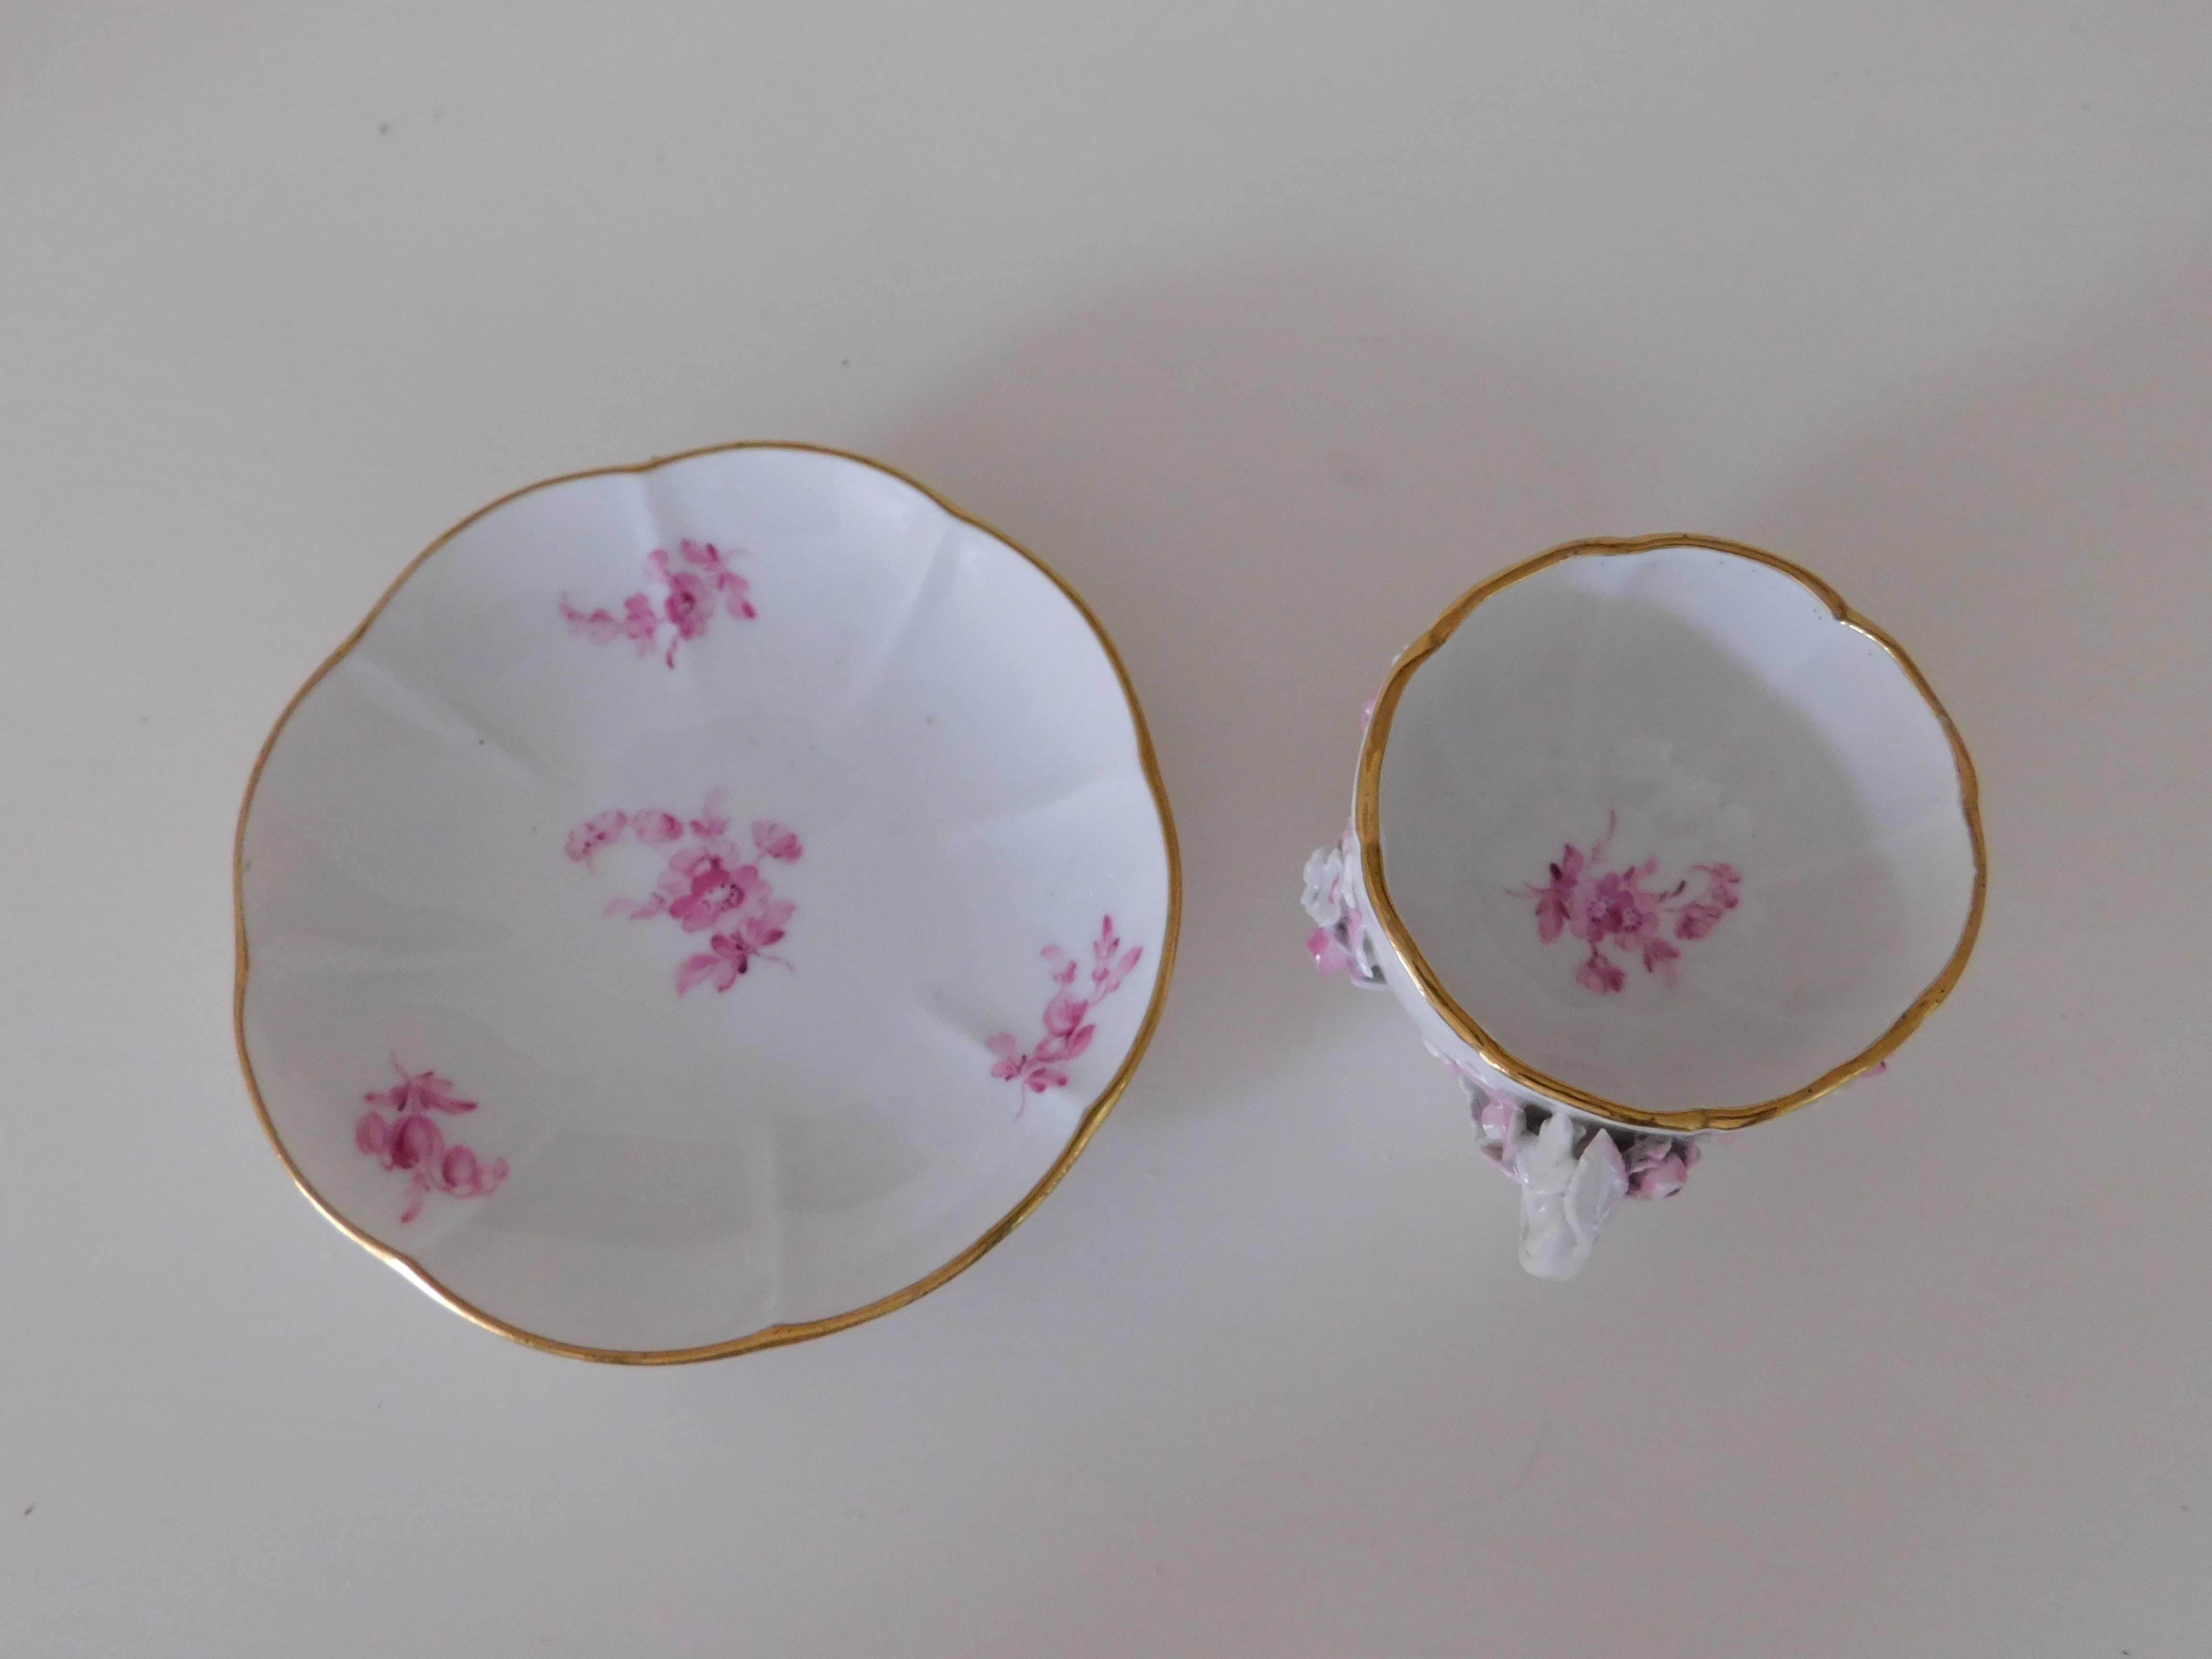 German 19th Century Meissen Porcelain Floral Teacup and Saucer For Sale